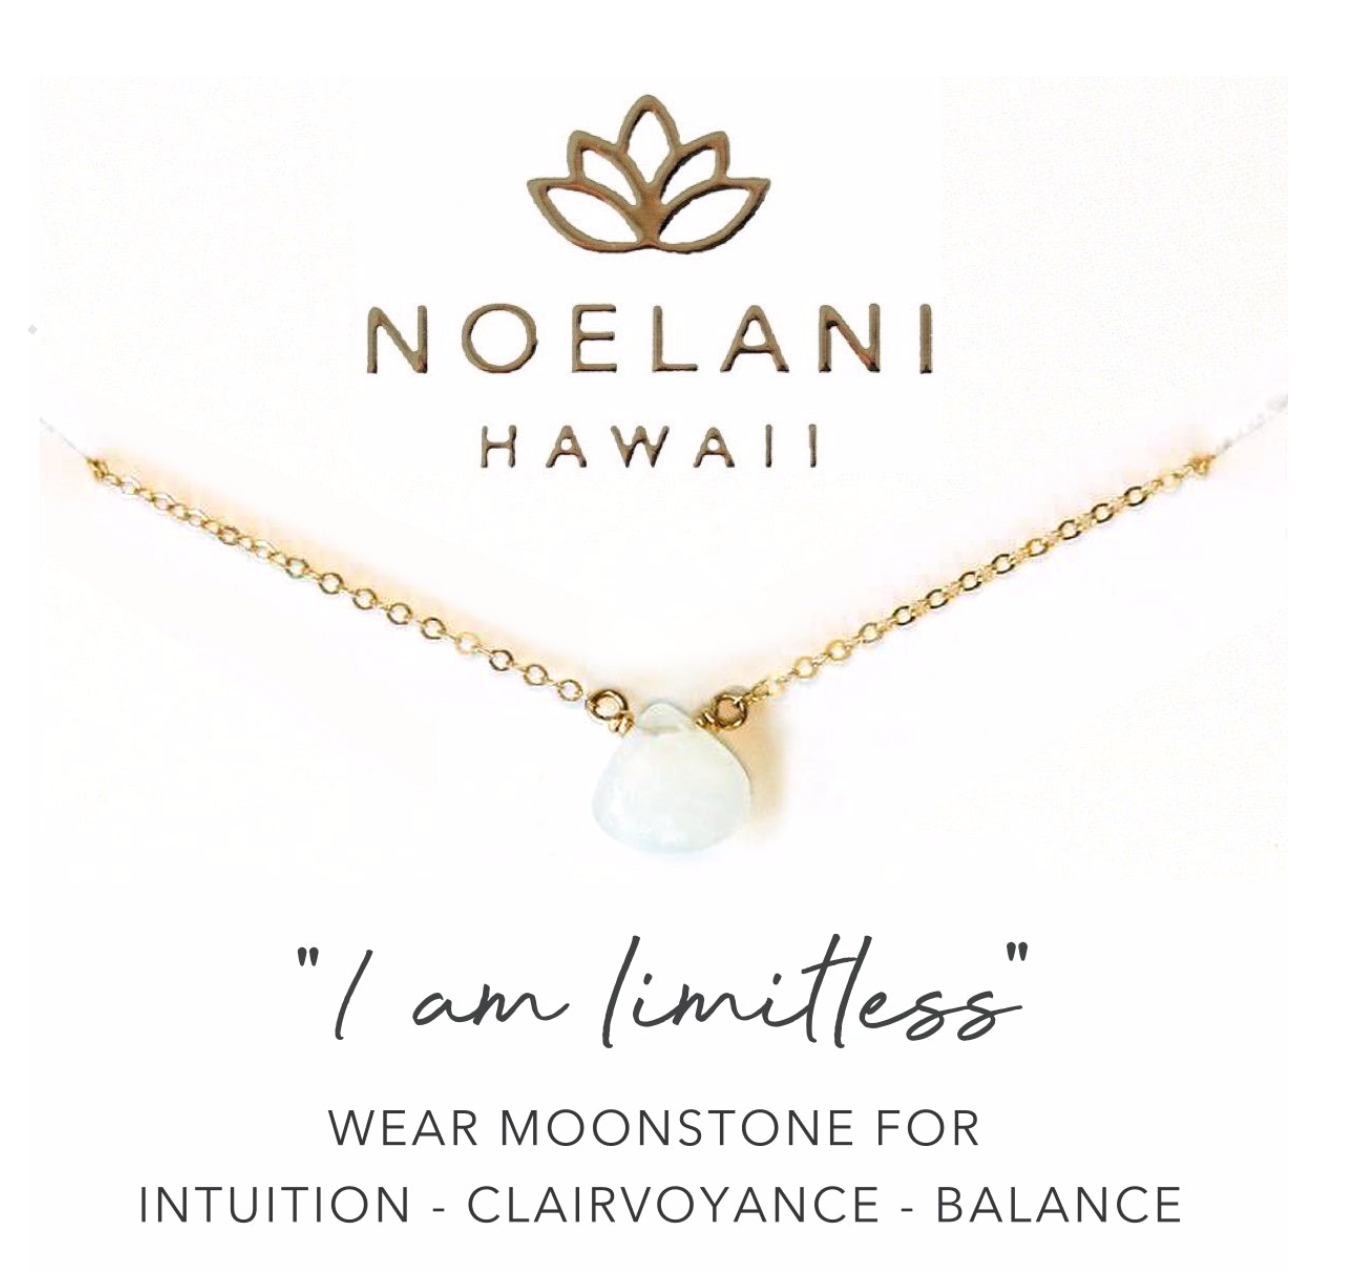 Necklace Infinity Moonstone 14K GF